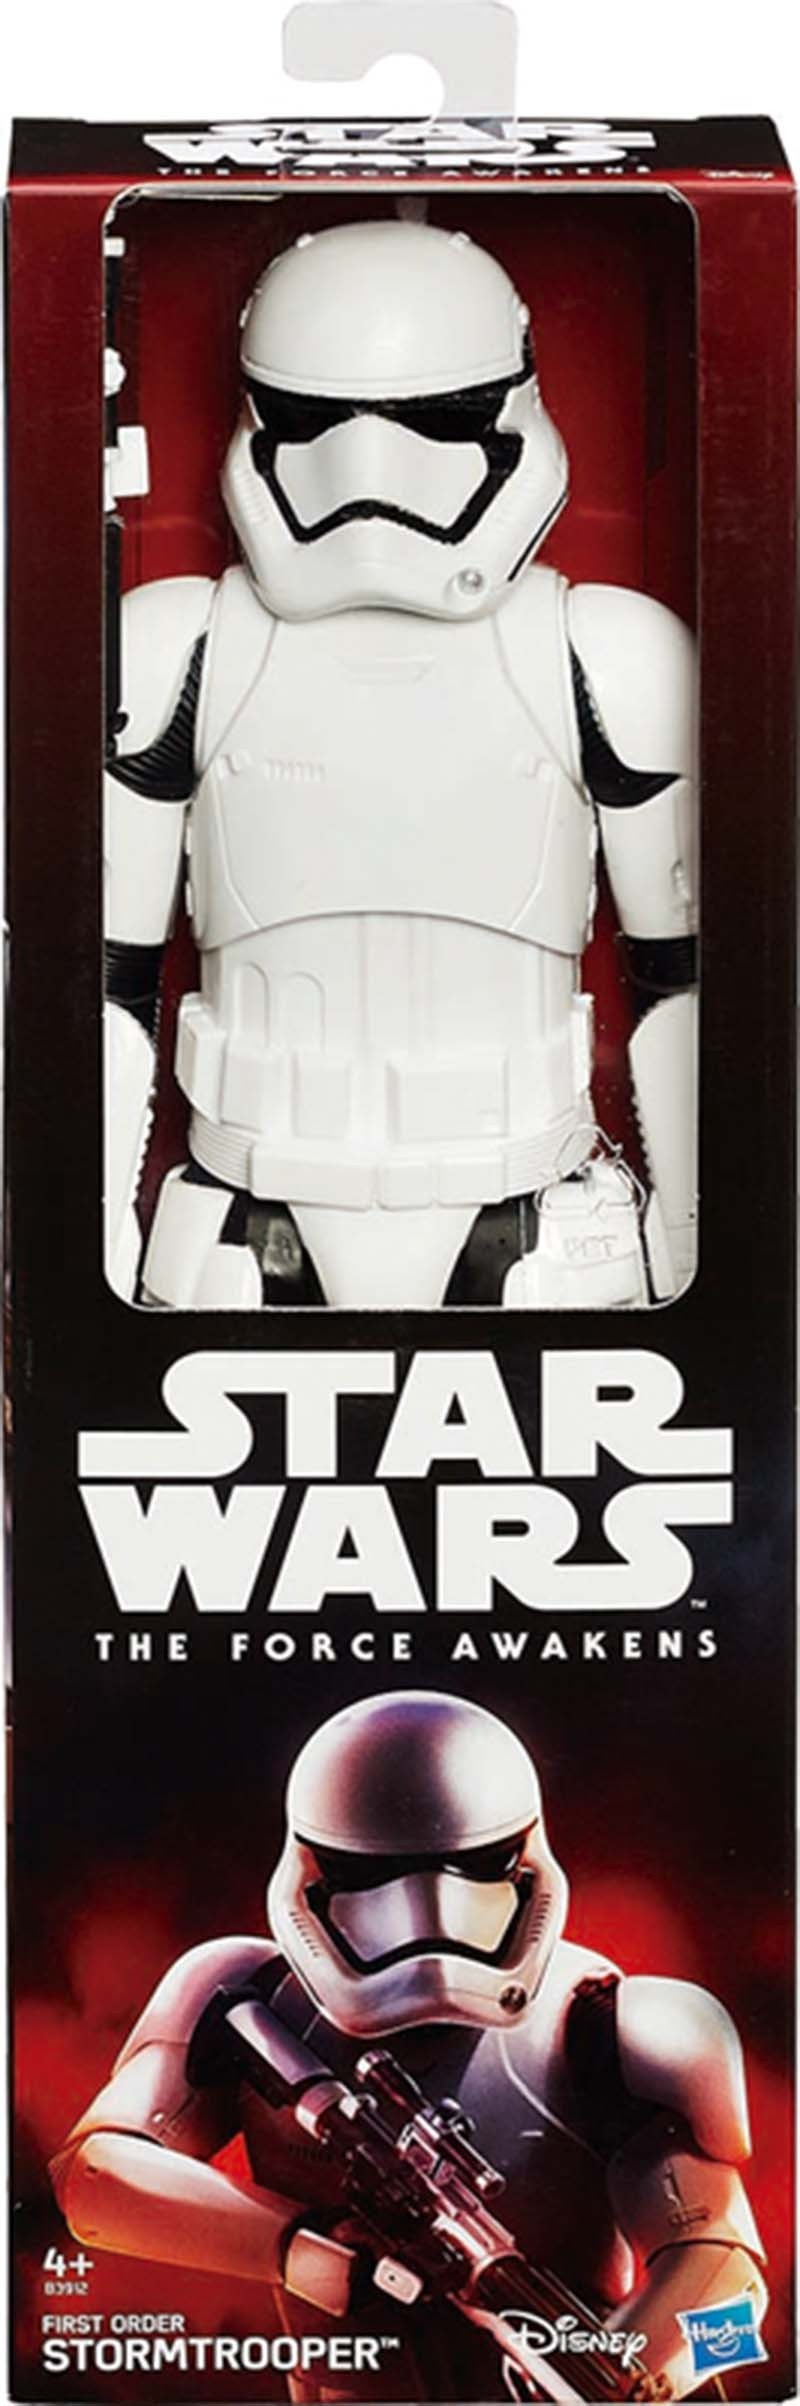 Star Wars stormtrooper Hasbro